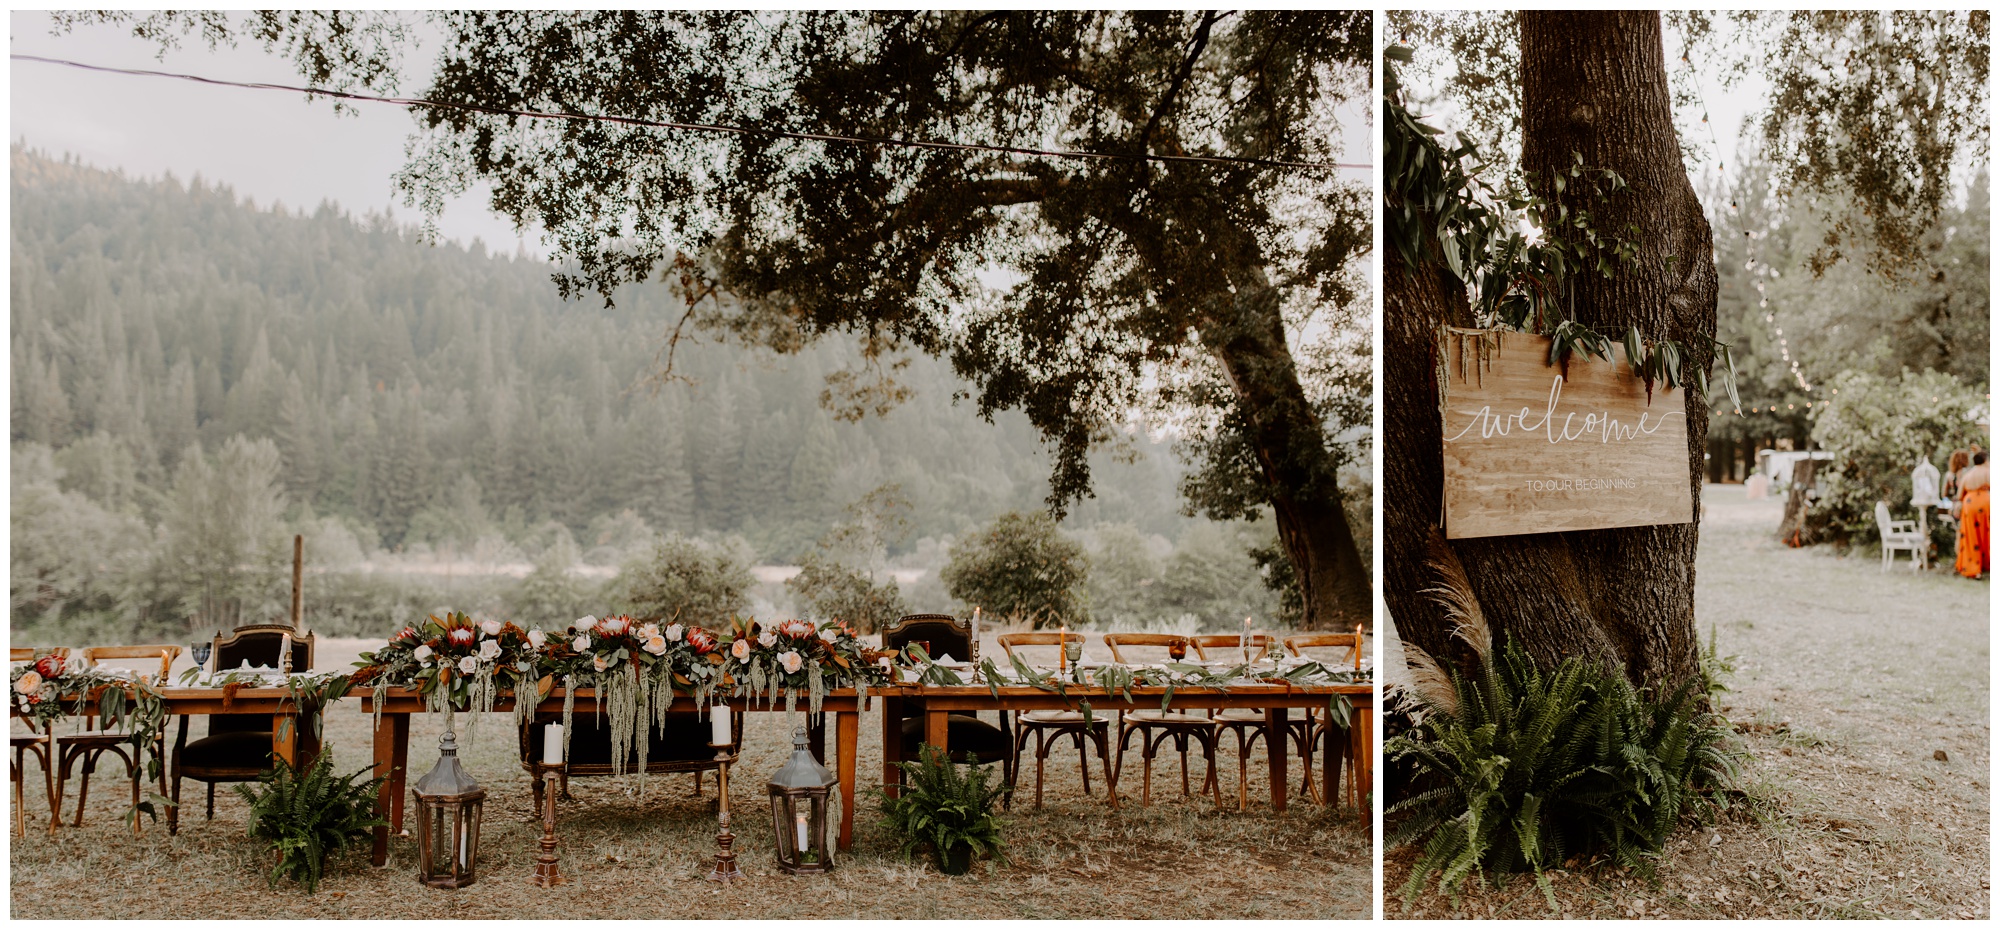 Redwood Festival Wedding Humbolt California - Jessica Heron Images_0061.jpg